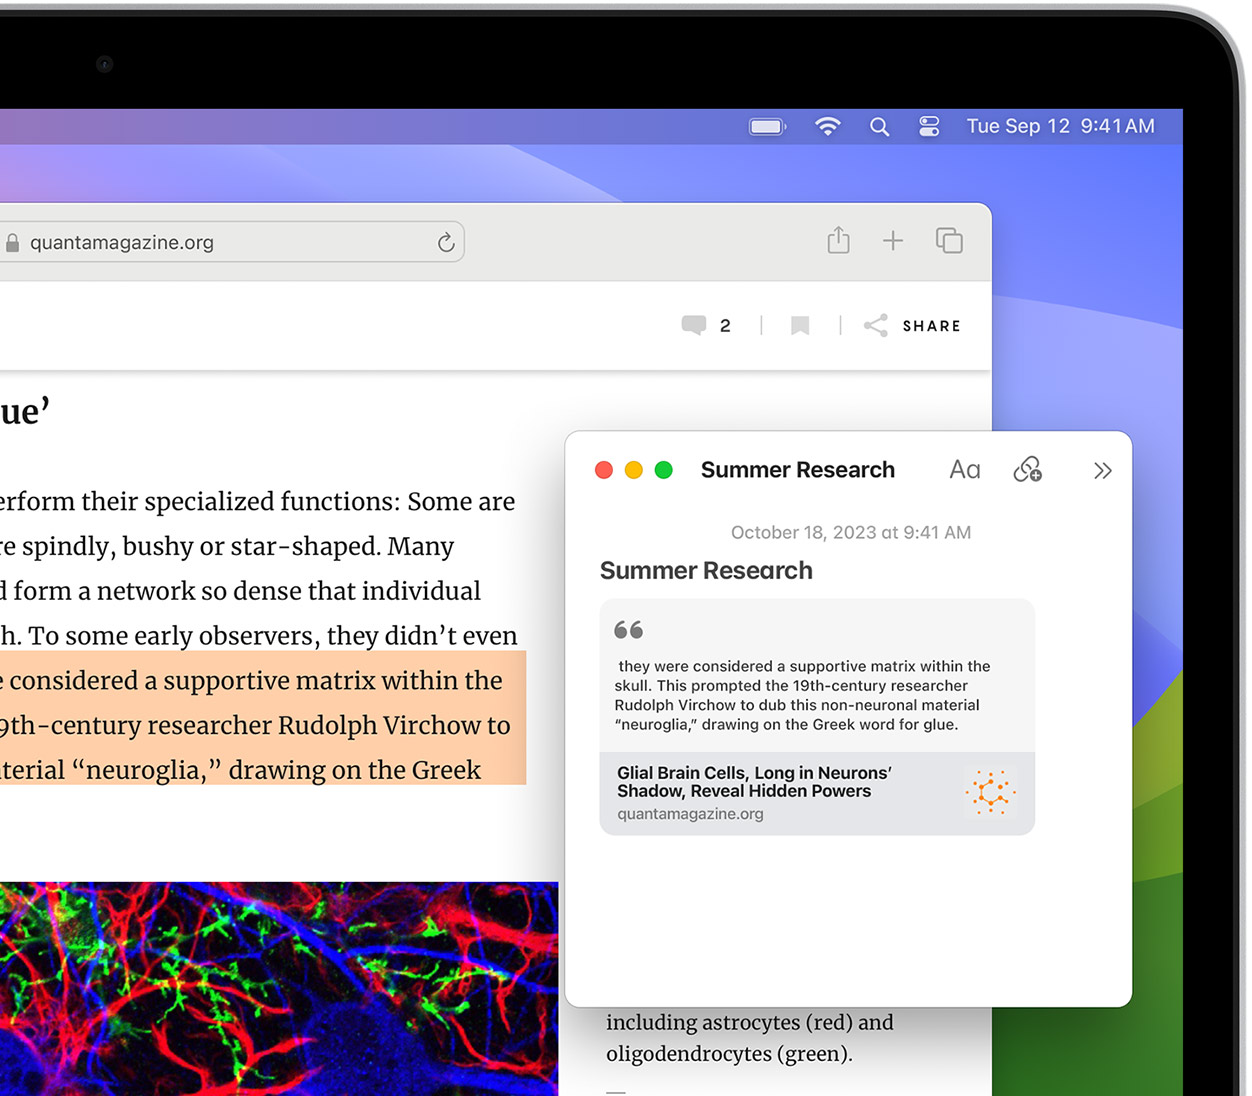 safari browser latest version free download for mac